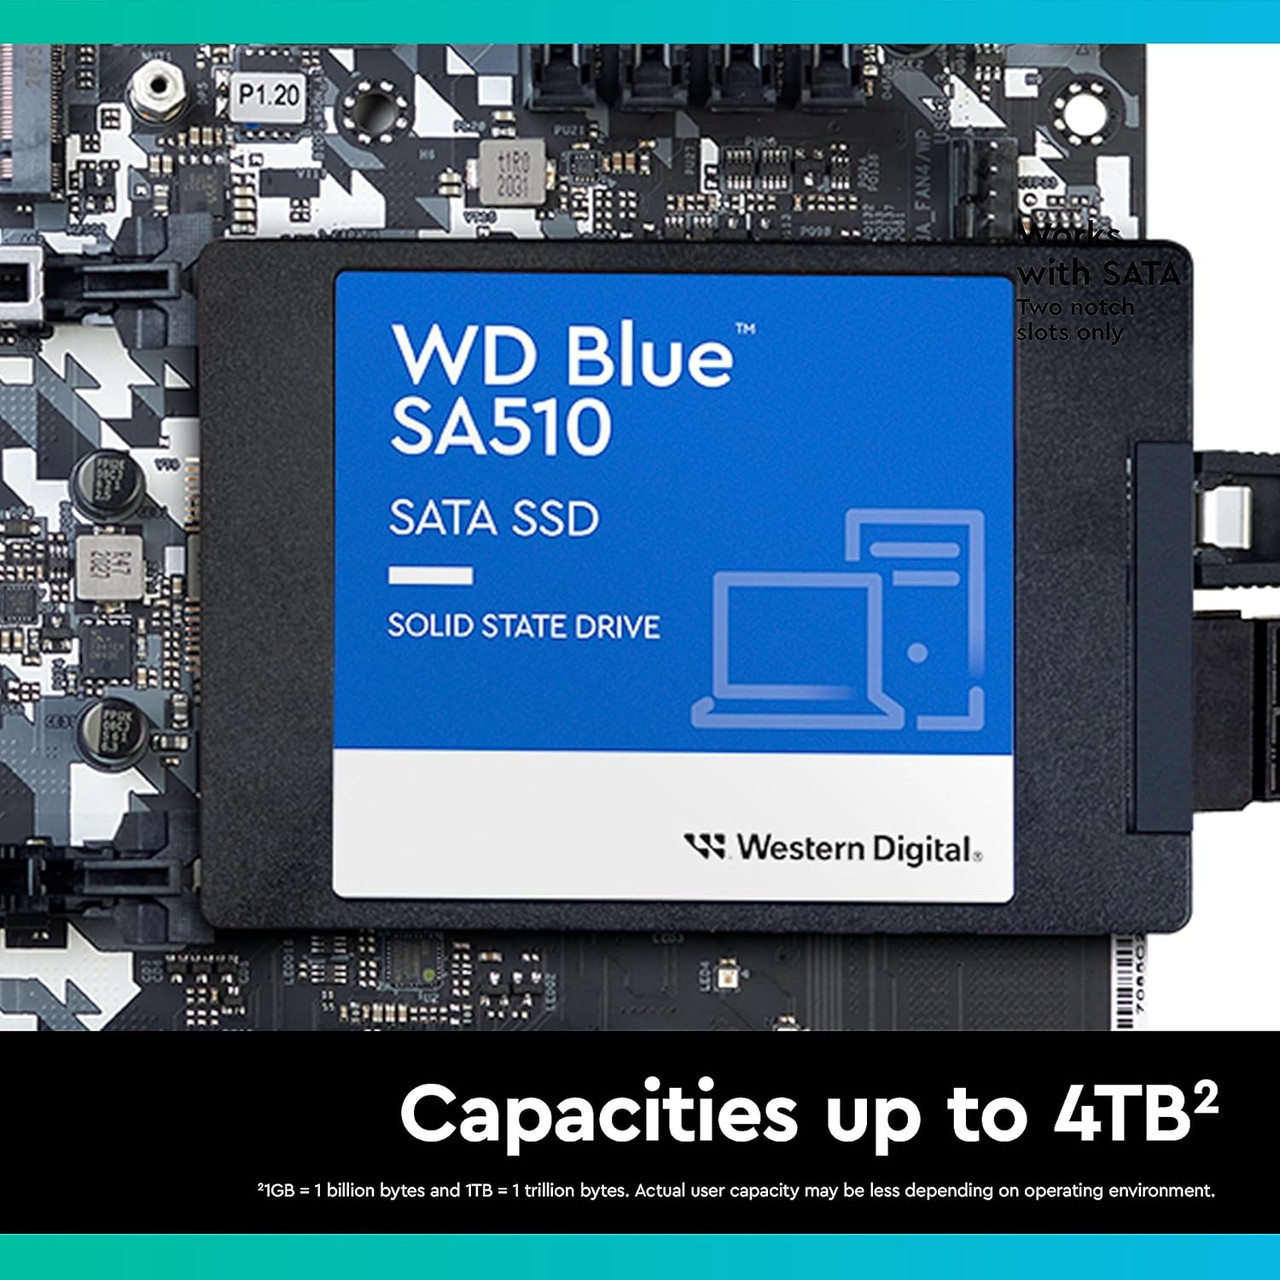 WD 2TB WD Blue SA510 SATA Internal Solid State Drive SSD - SATA III 6 Gb/s, 2.5"/7mm, Up to 560 MB/s (WDS200T3B0A)